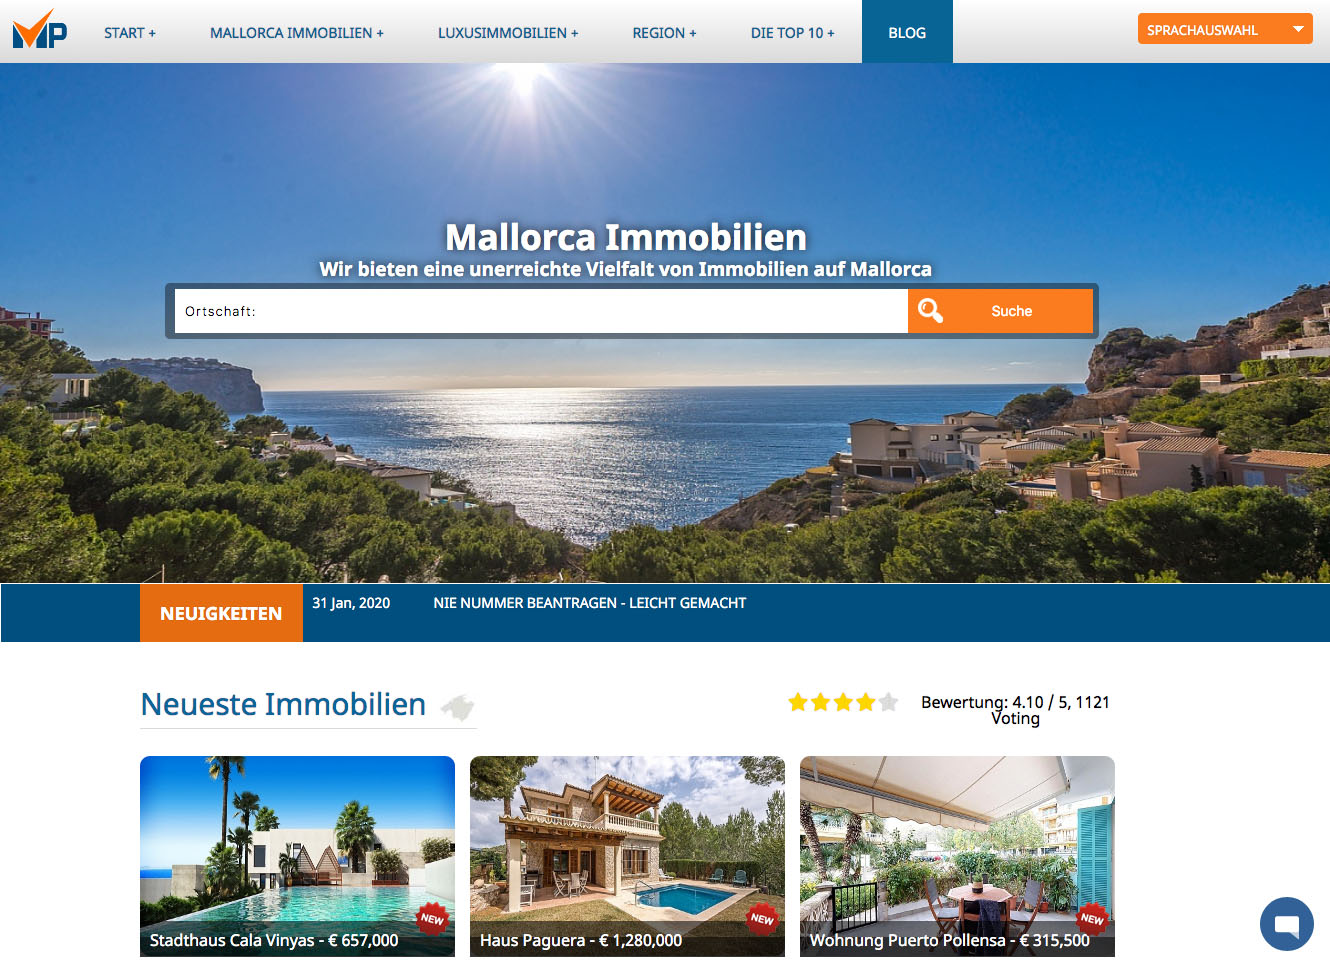 Mallorca Immobilien Properties Seo